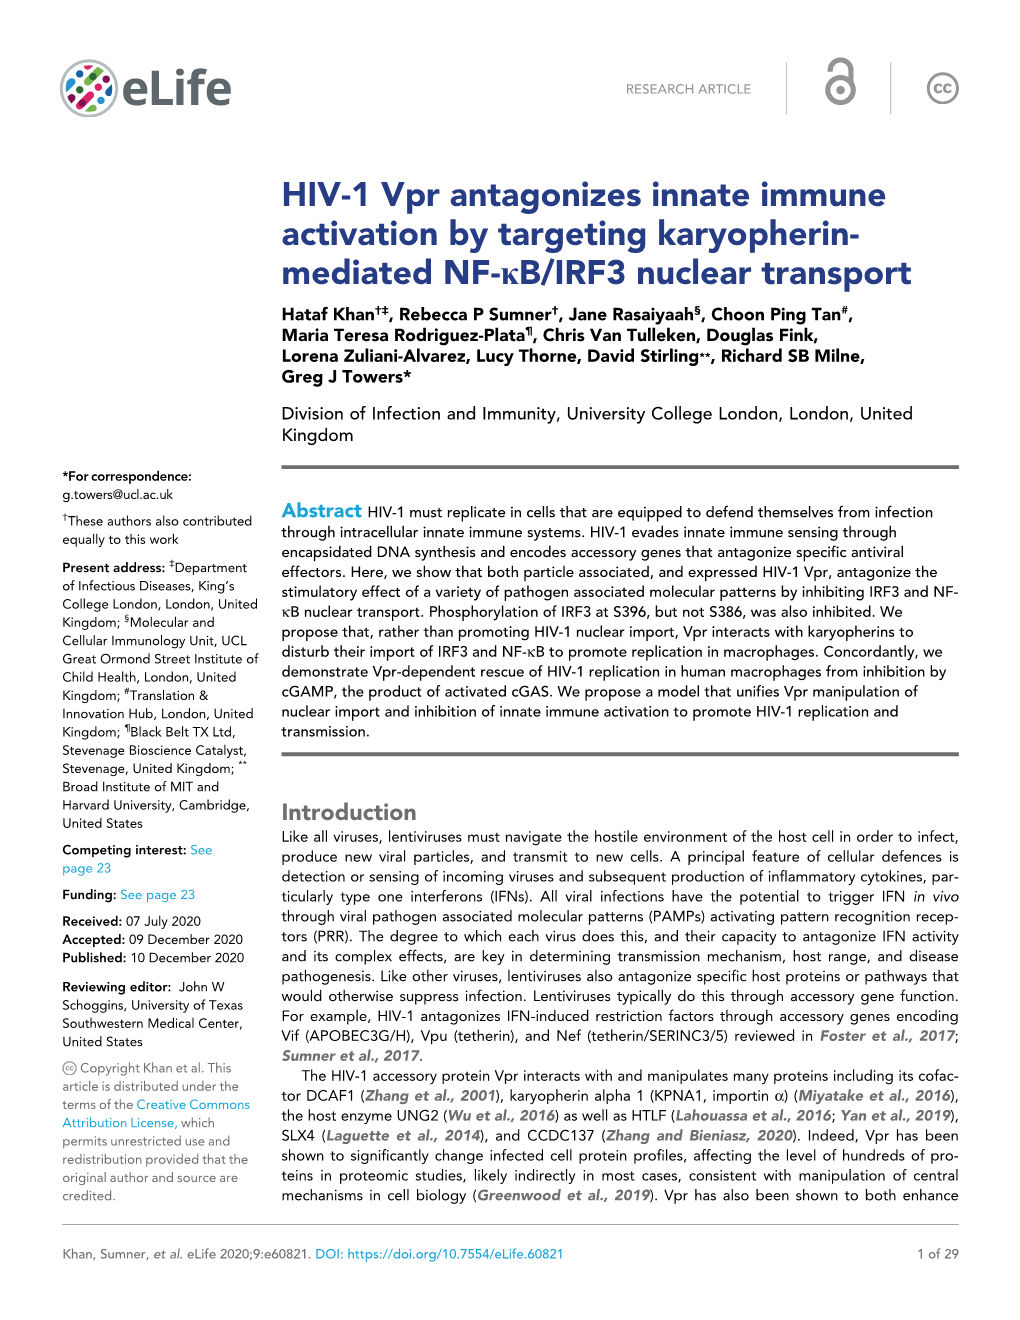 HIV-1 Vpr Antagonizes Innate Immune Activation by Targeting